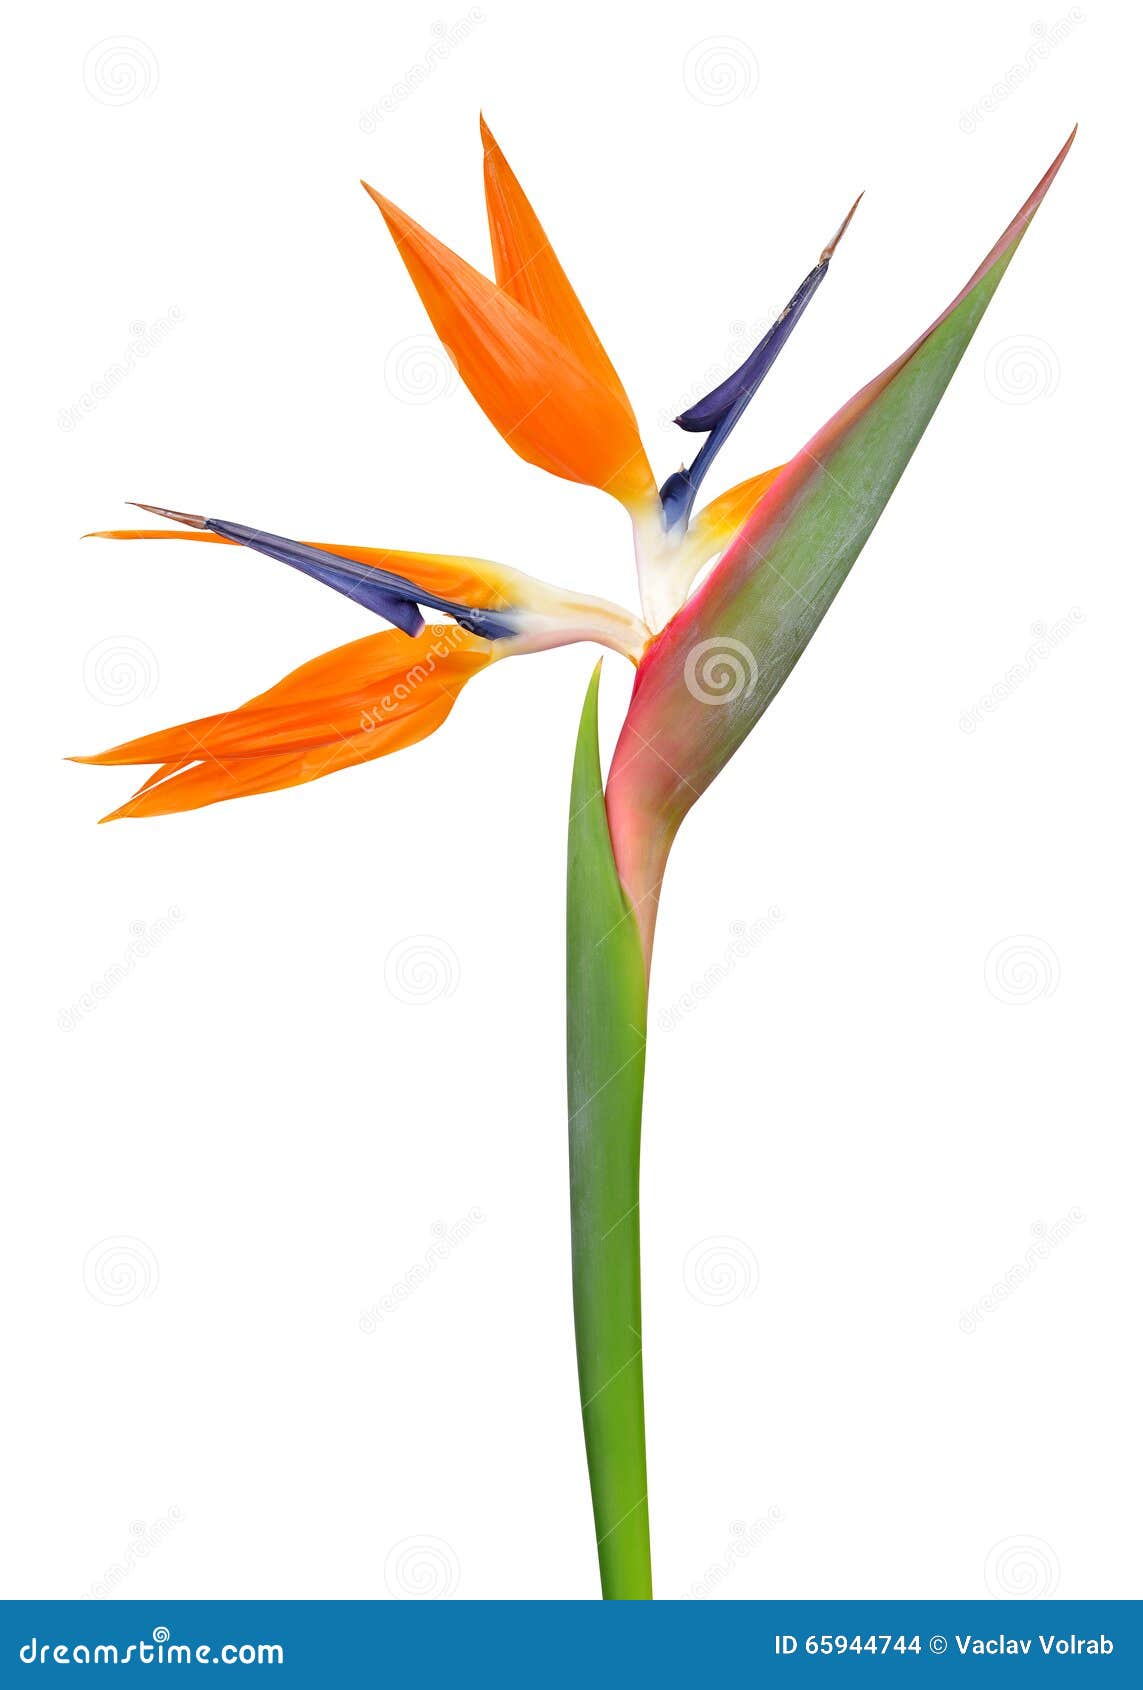 strelitzia reginae, bird of paradise flower